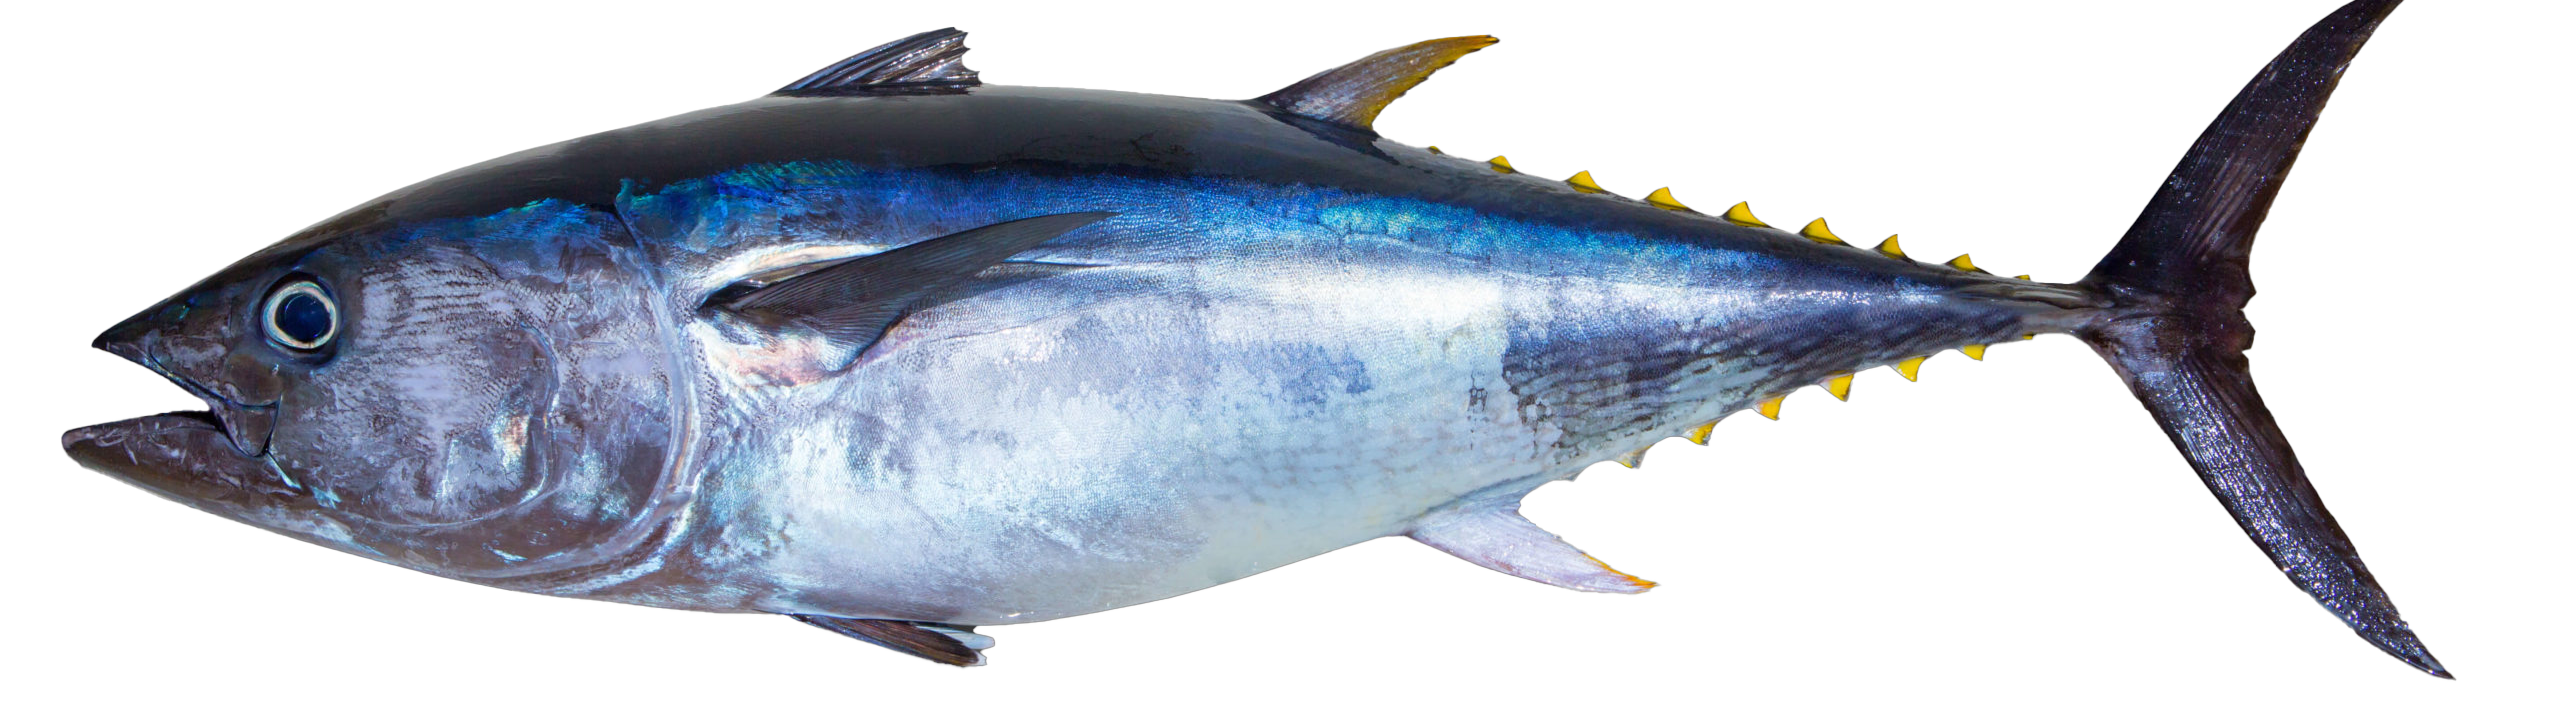 Photo of Yellowfin Tuna